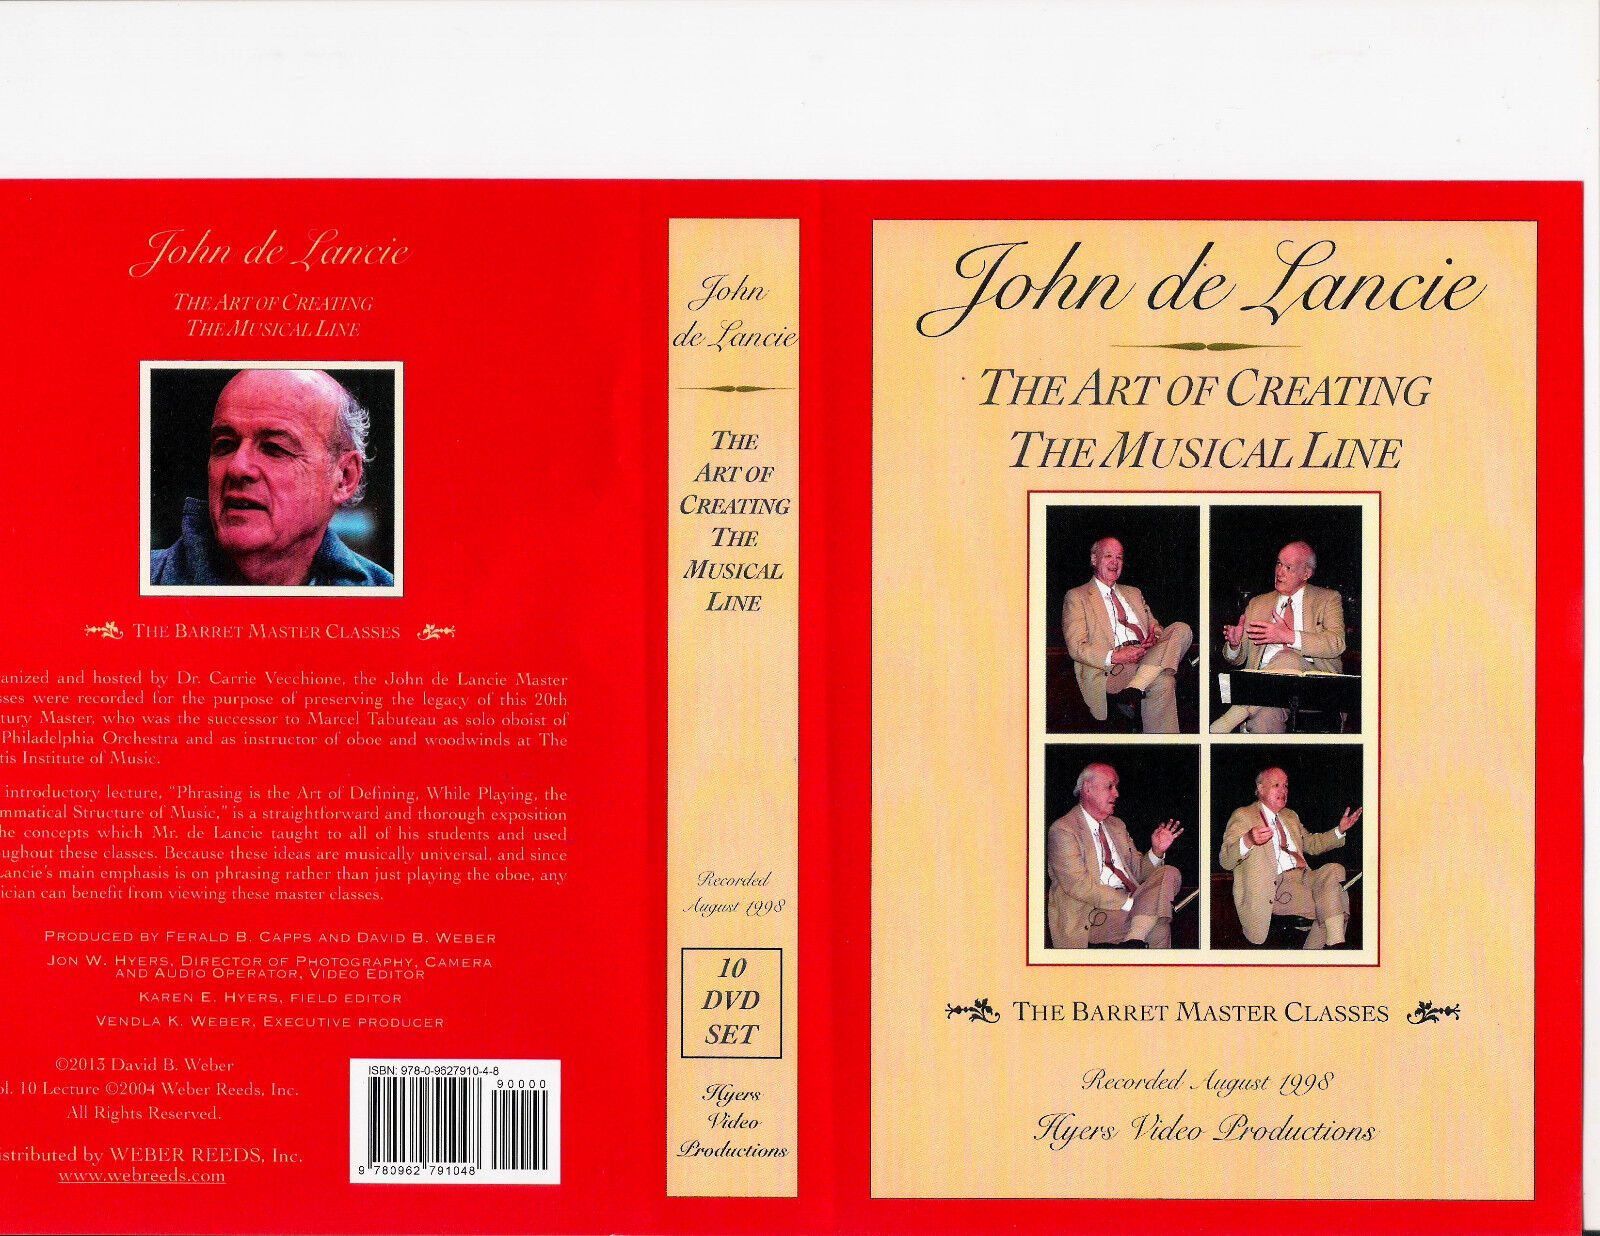 Mr. JOHN DE LANCIE 10 DVD Art of Creating the Musical Line, ON SALE